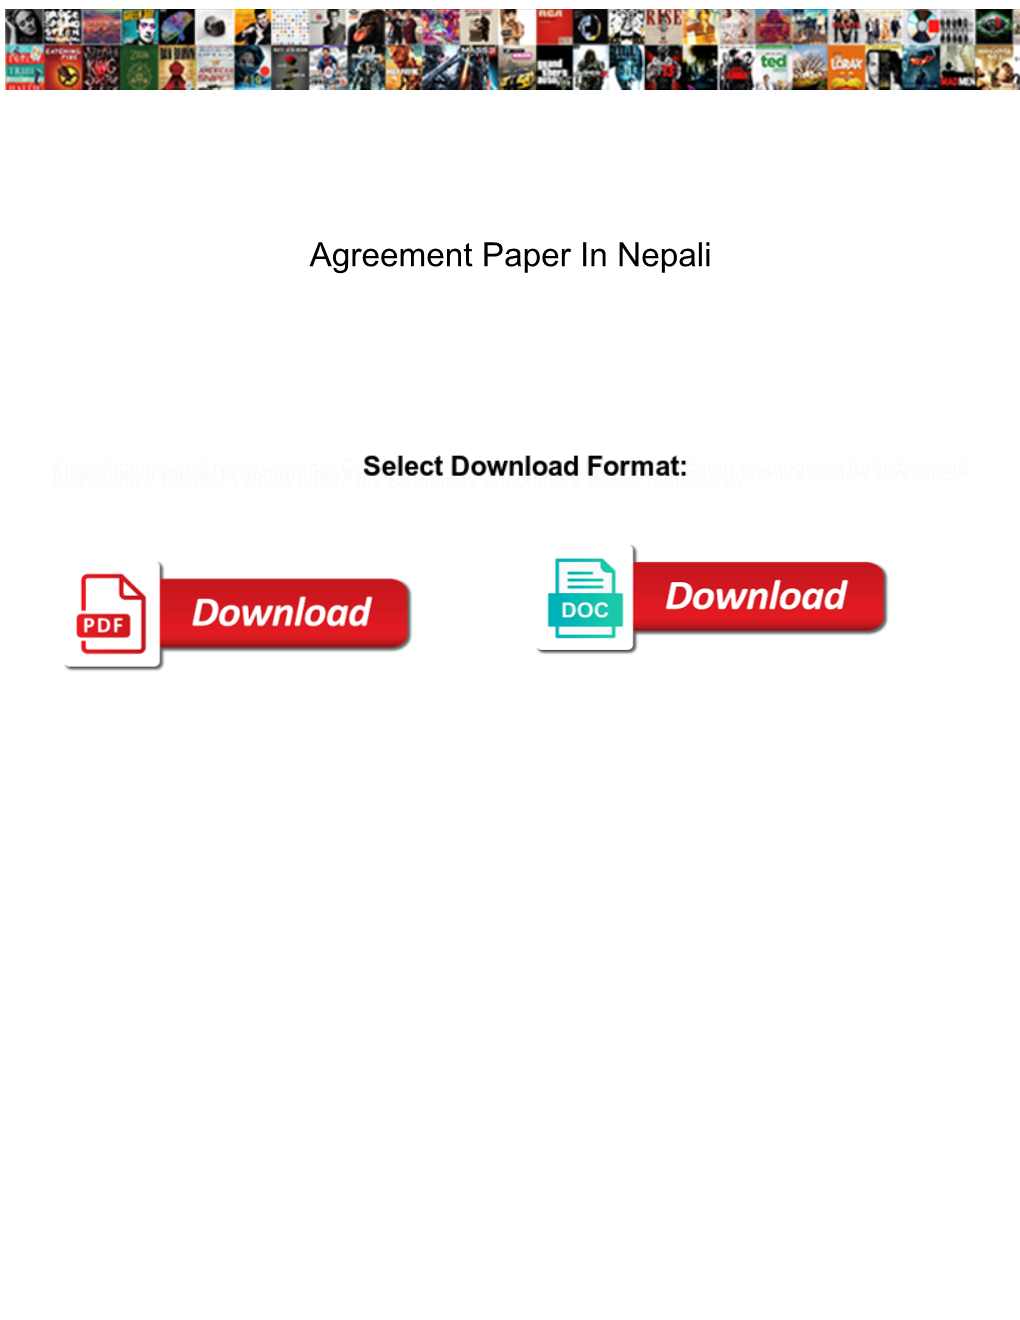 Agreement Paper in Nepali